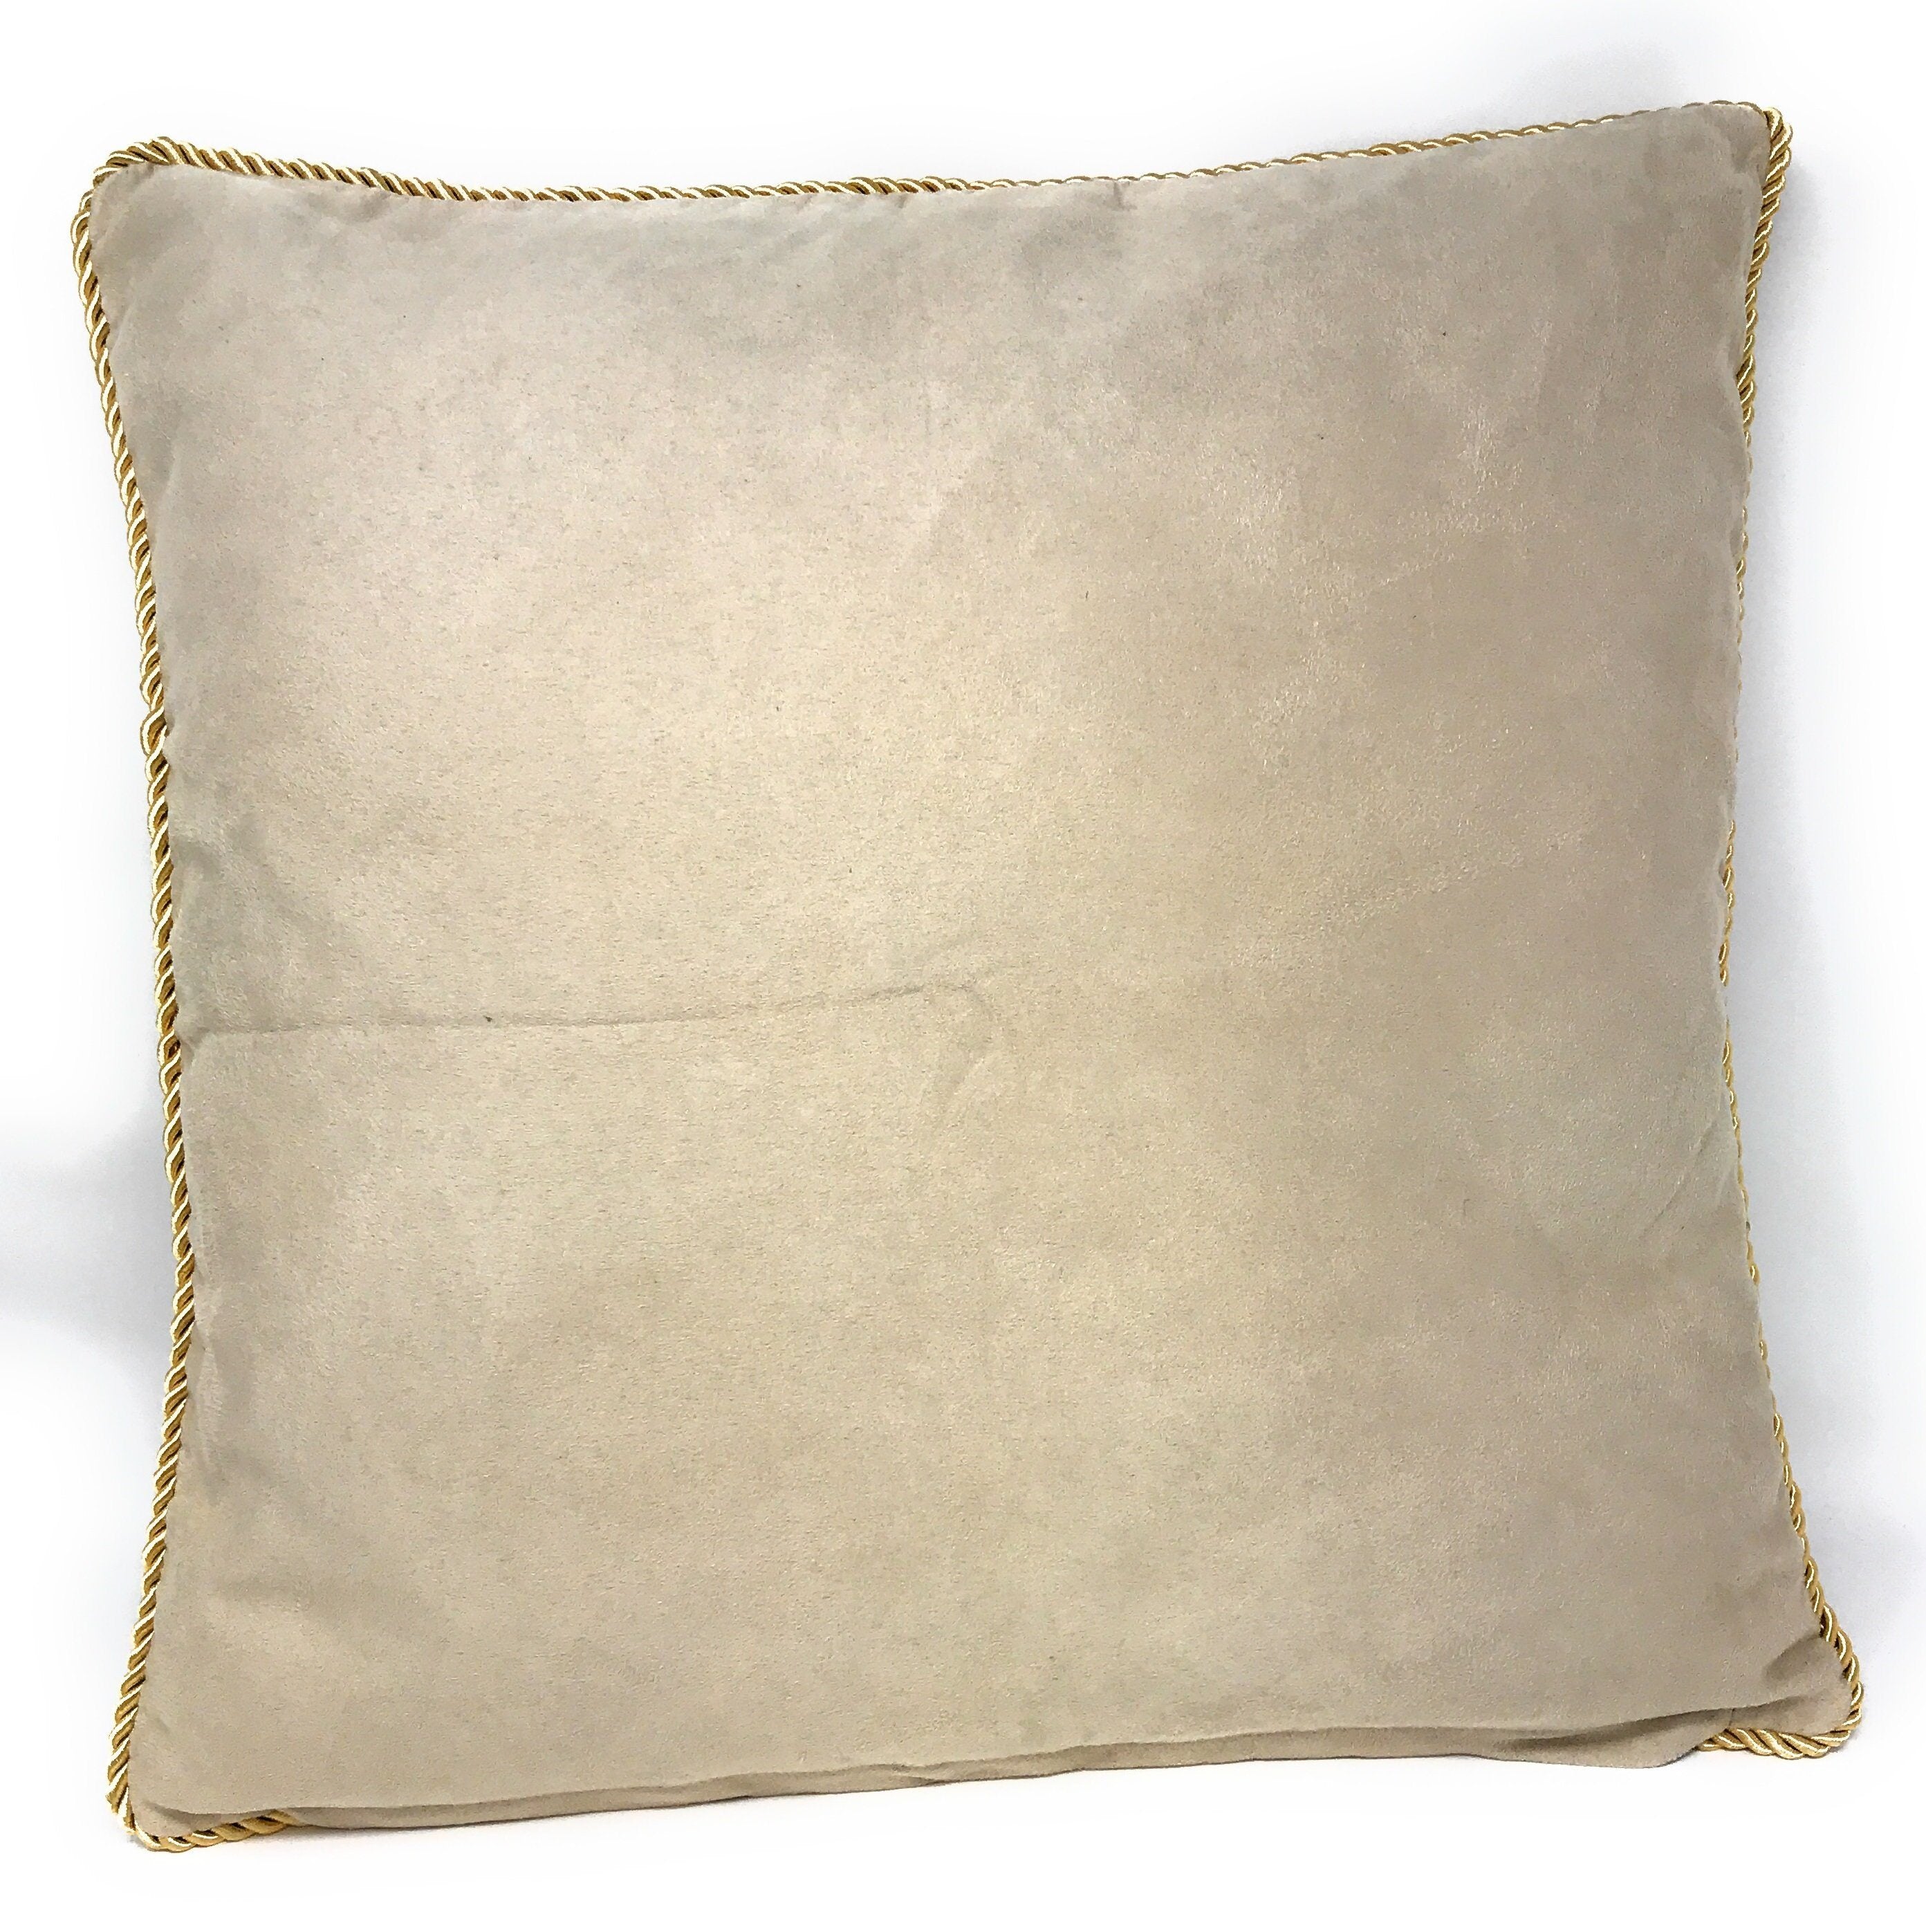 Tache Napoleon Bowaparte Vintage Tapestry Throw Pillow Cover (CC-6011)